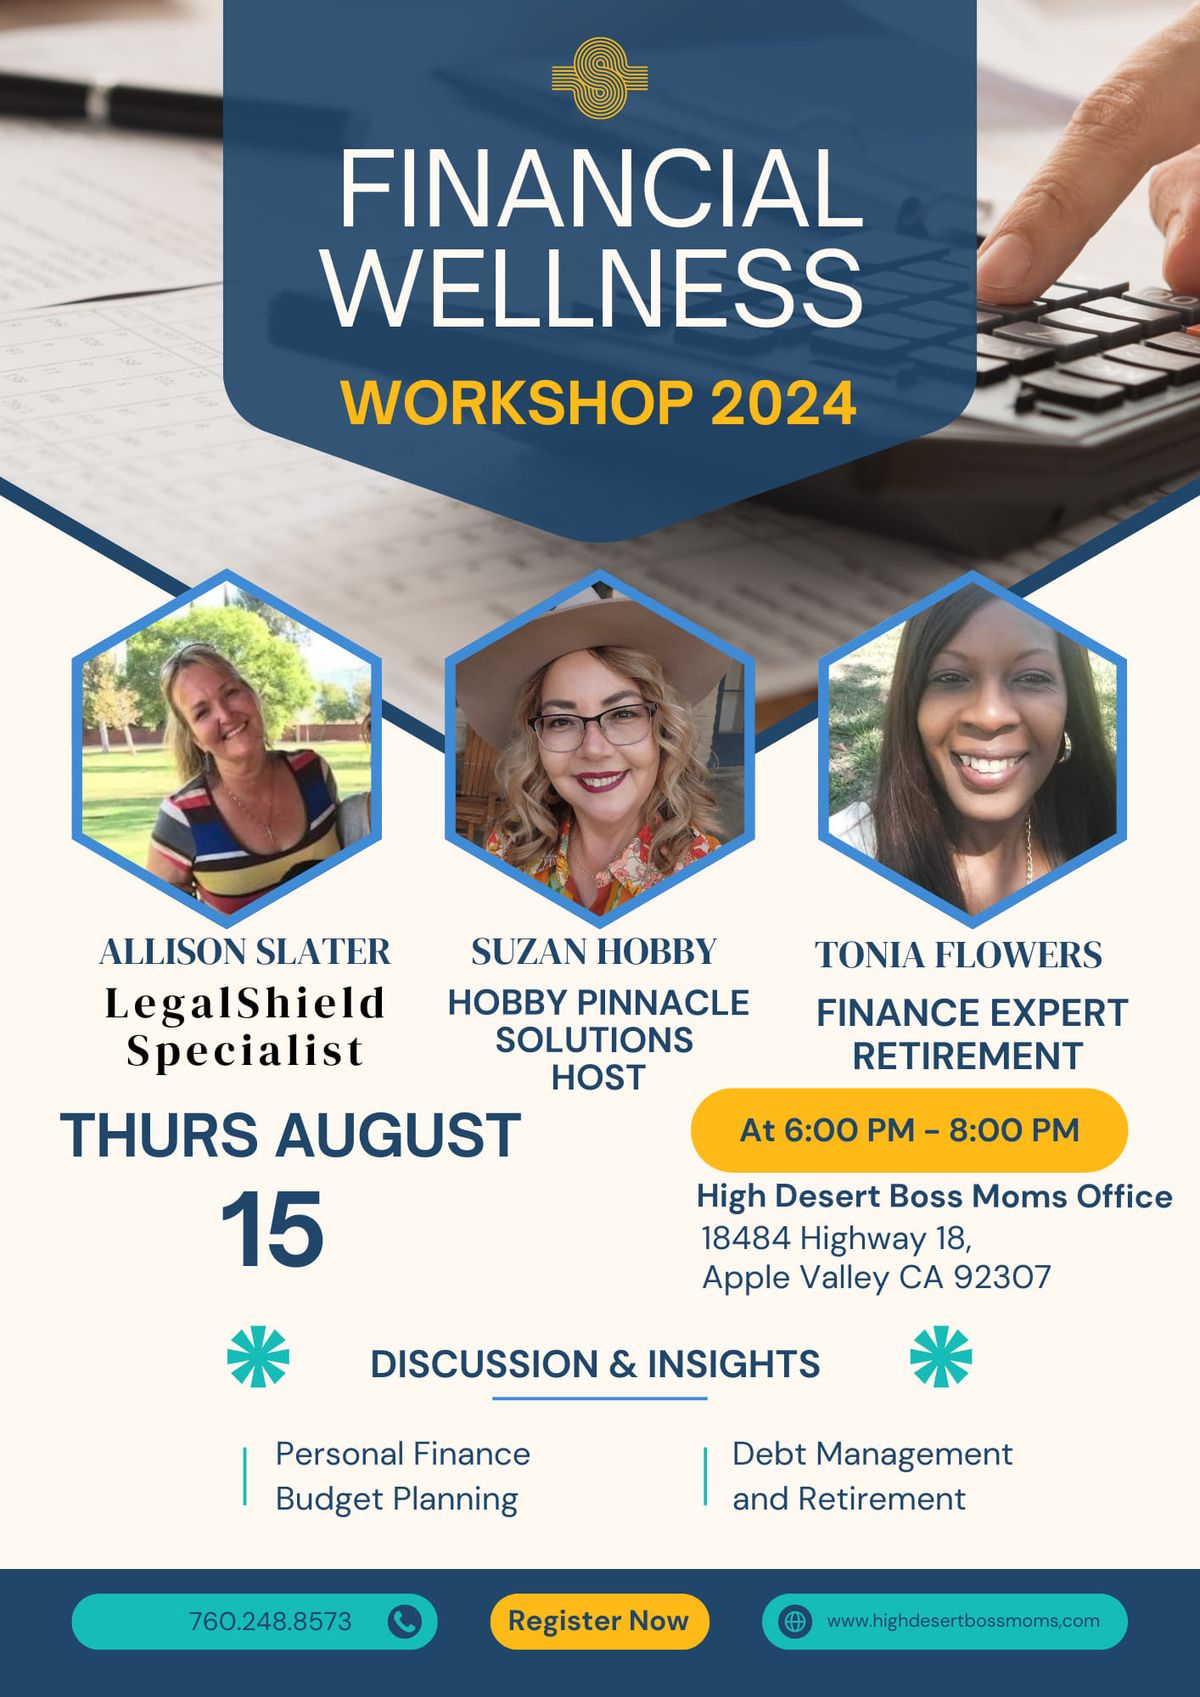 Thursday August 15th - Financial Wellness Workshop 